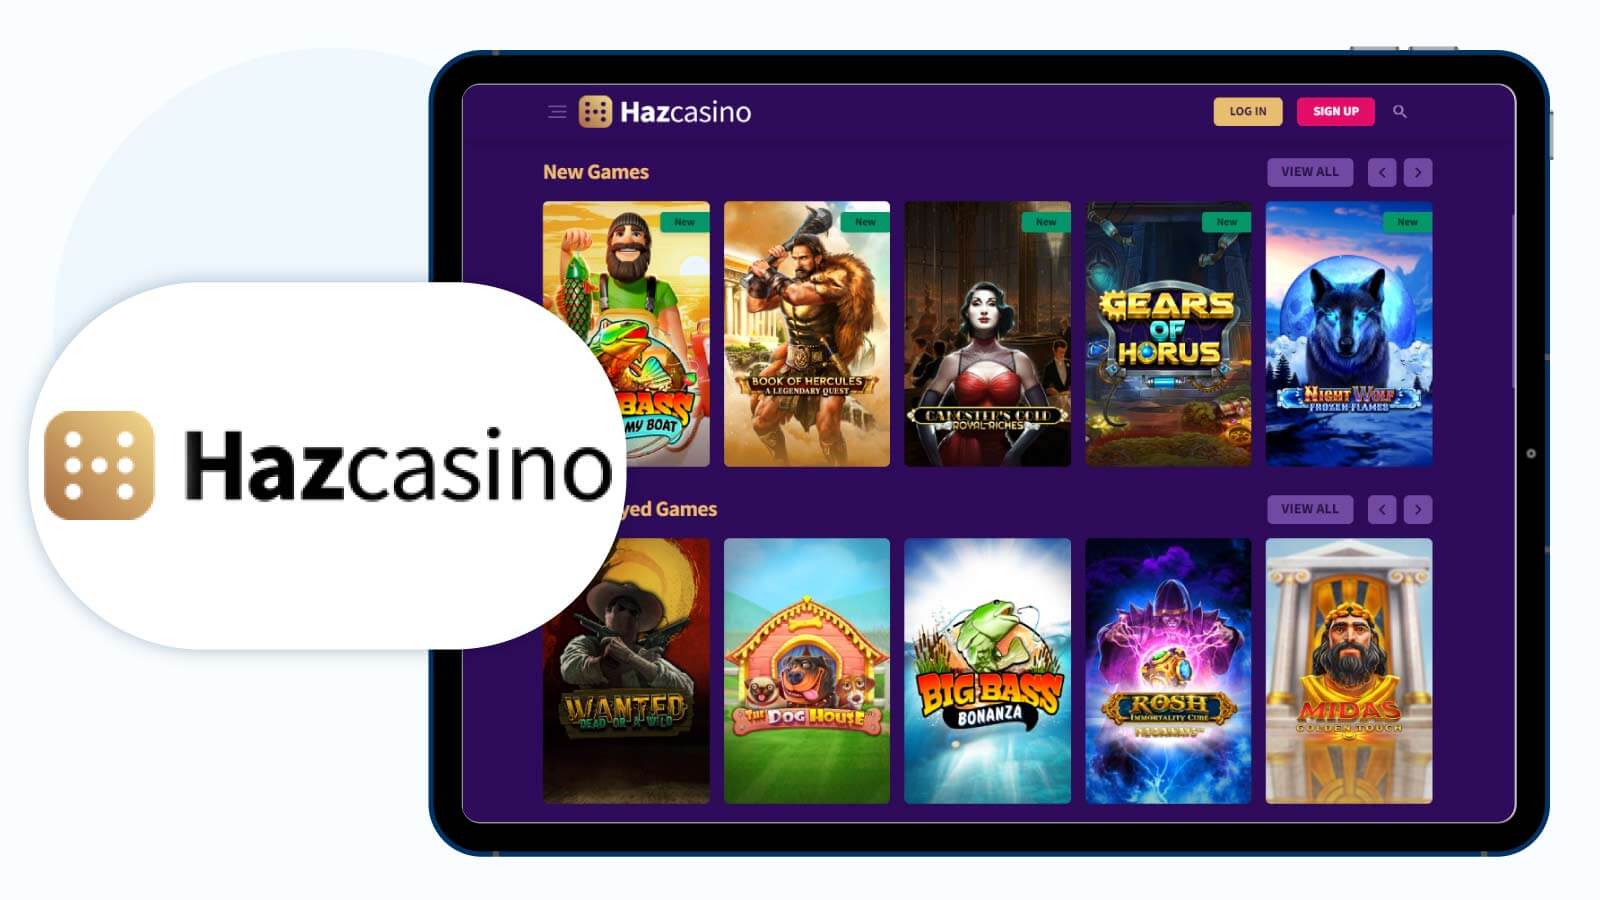 Haz-Casino-Impressive-200%-Deposit-Bonus-up-to-€200-With-No-Wagering